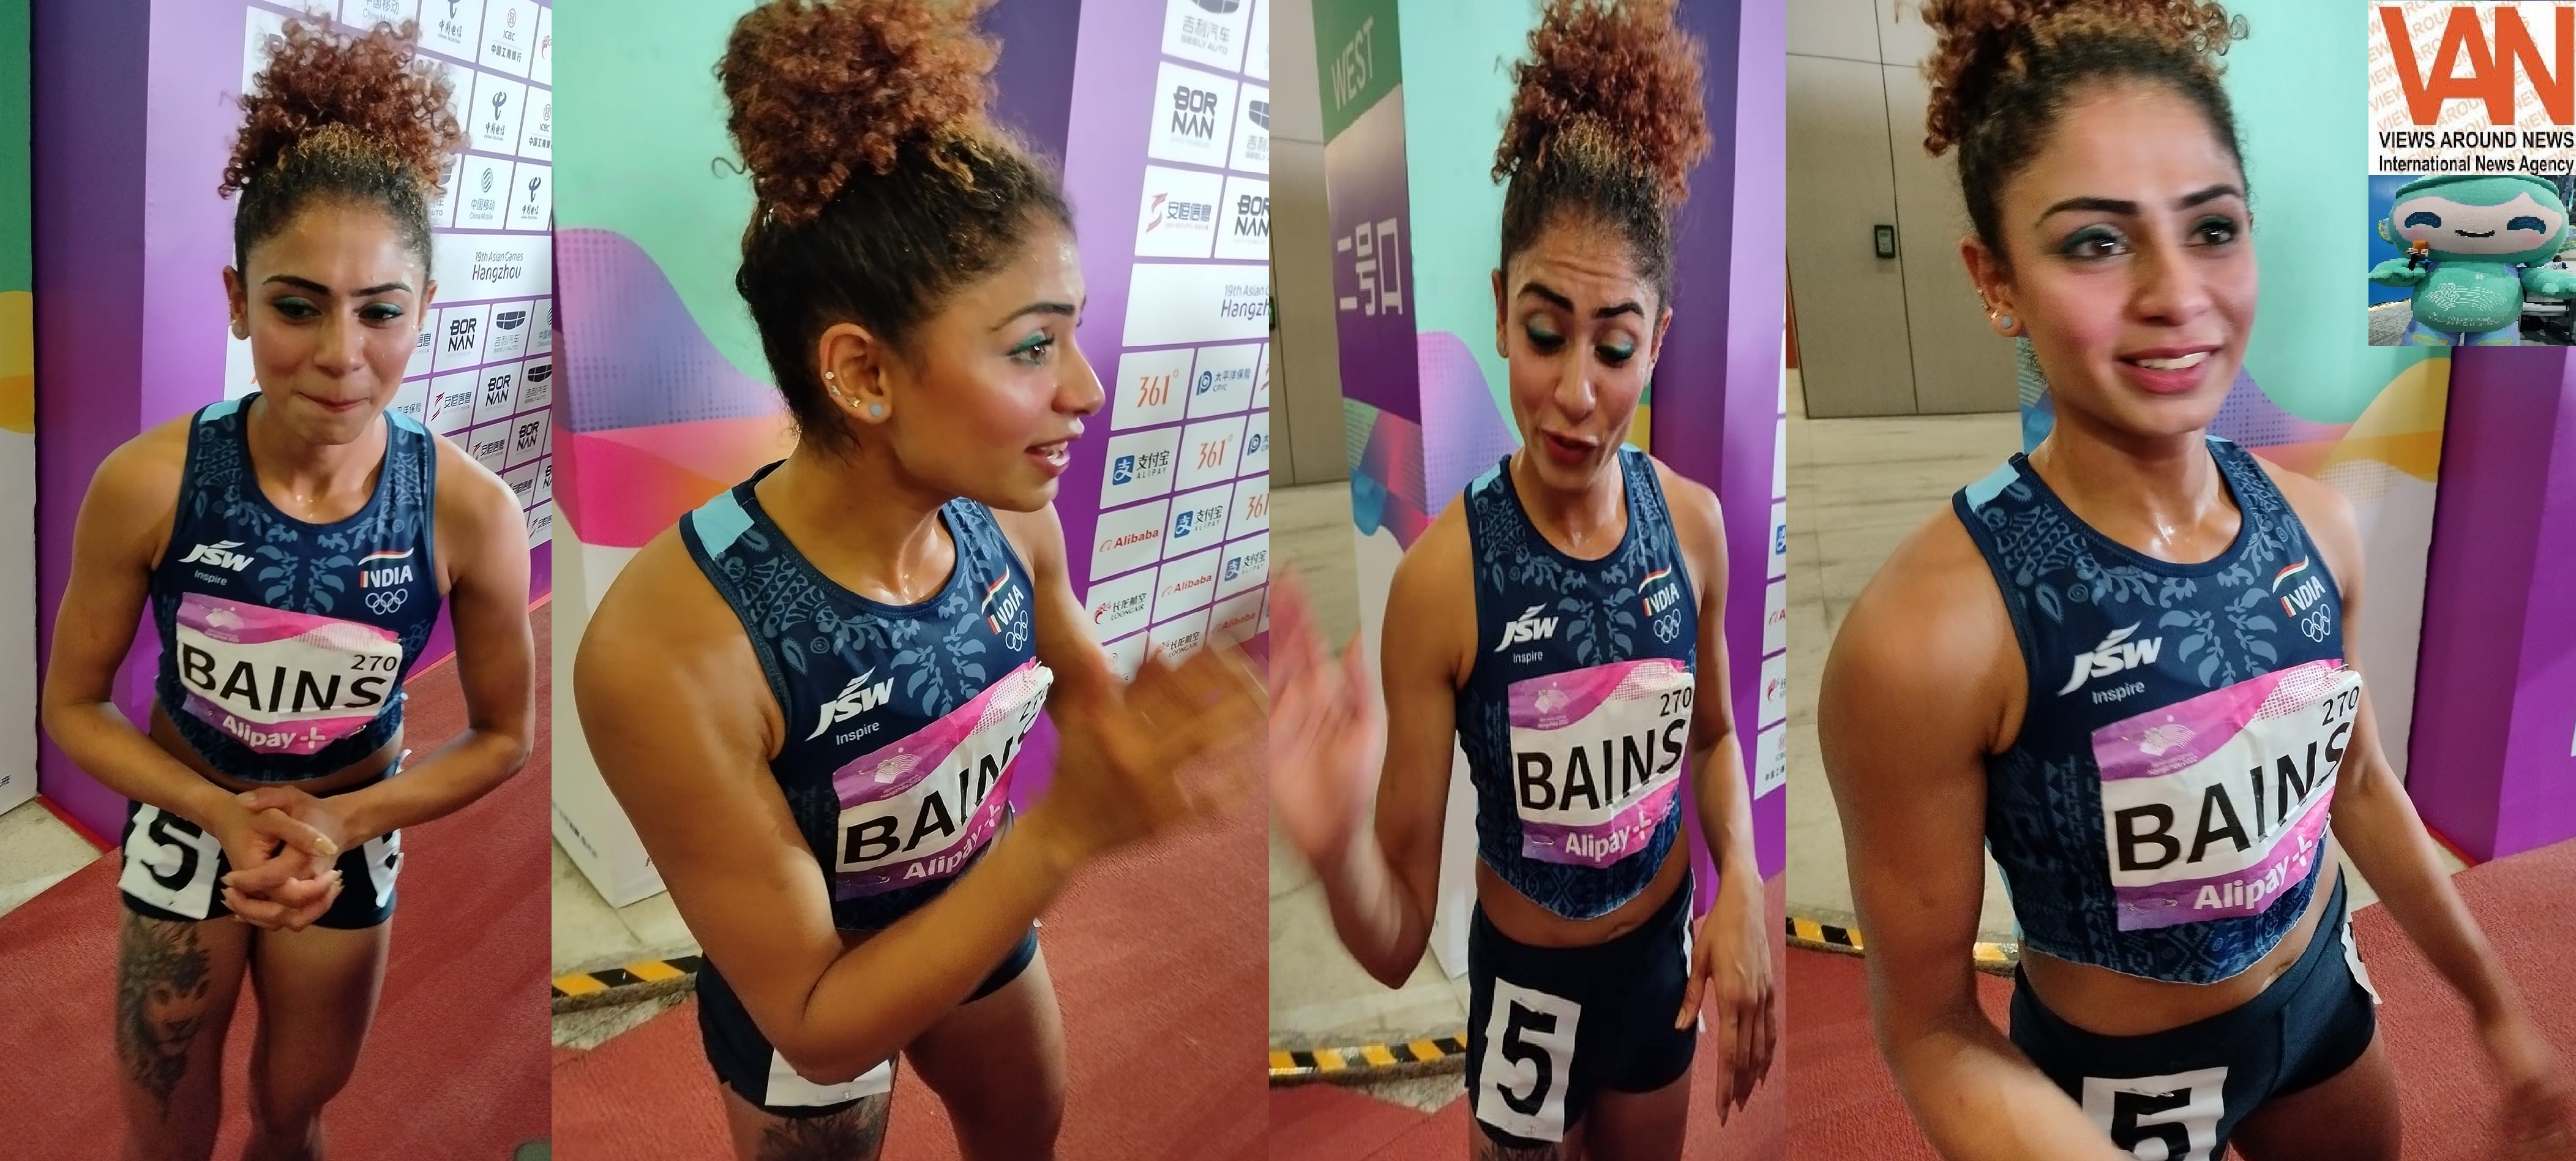 HARMILAN BAINS bagged SILVER in 800M women's Final